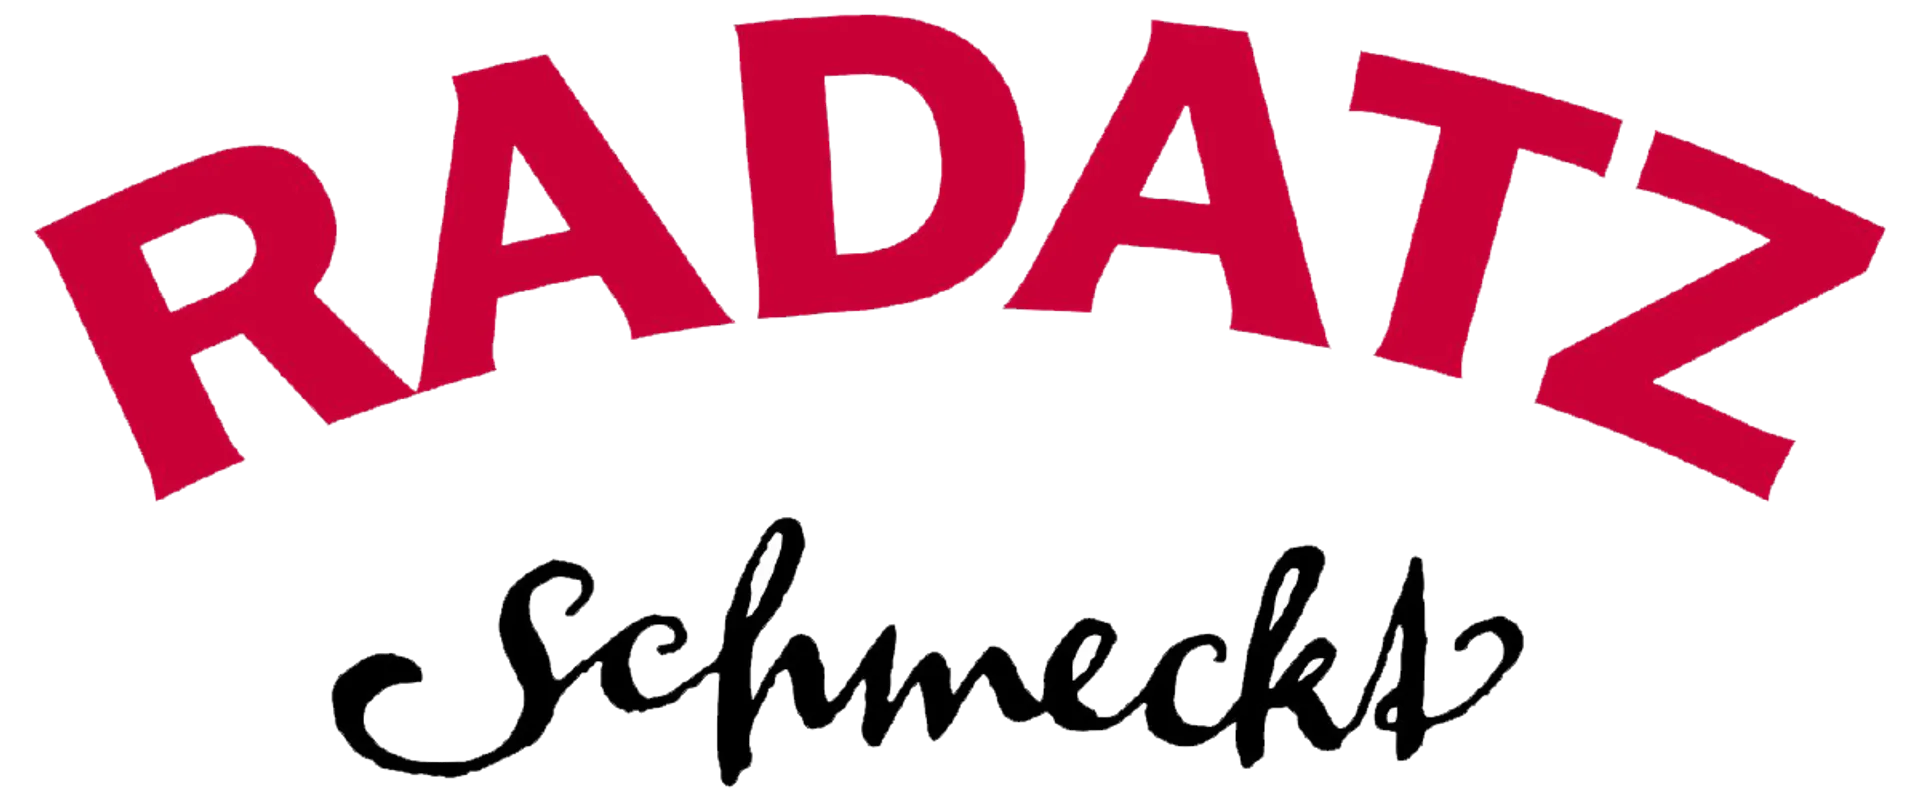 RADATZ logo die aktuell Flugblatt